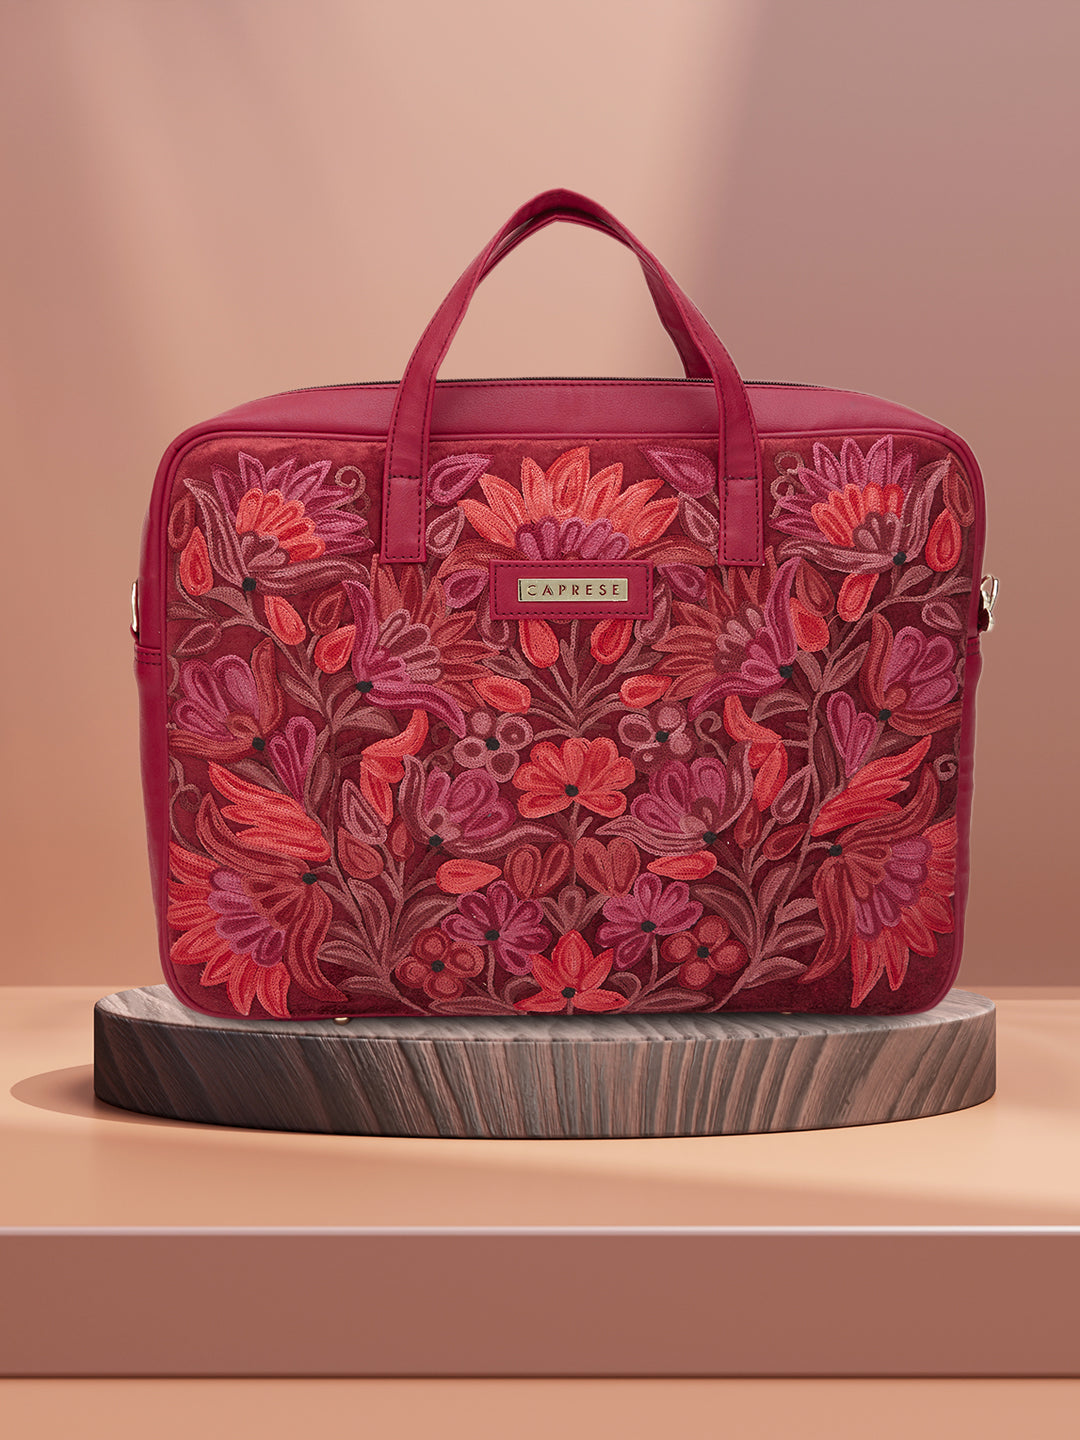 Caprese Tresna Embroidery Laptop Tote Handbag